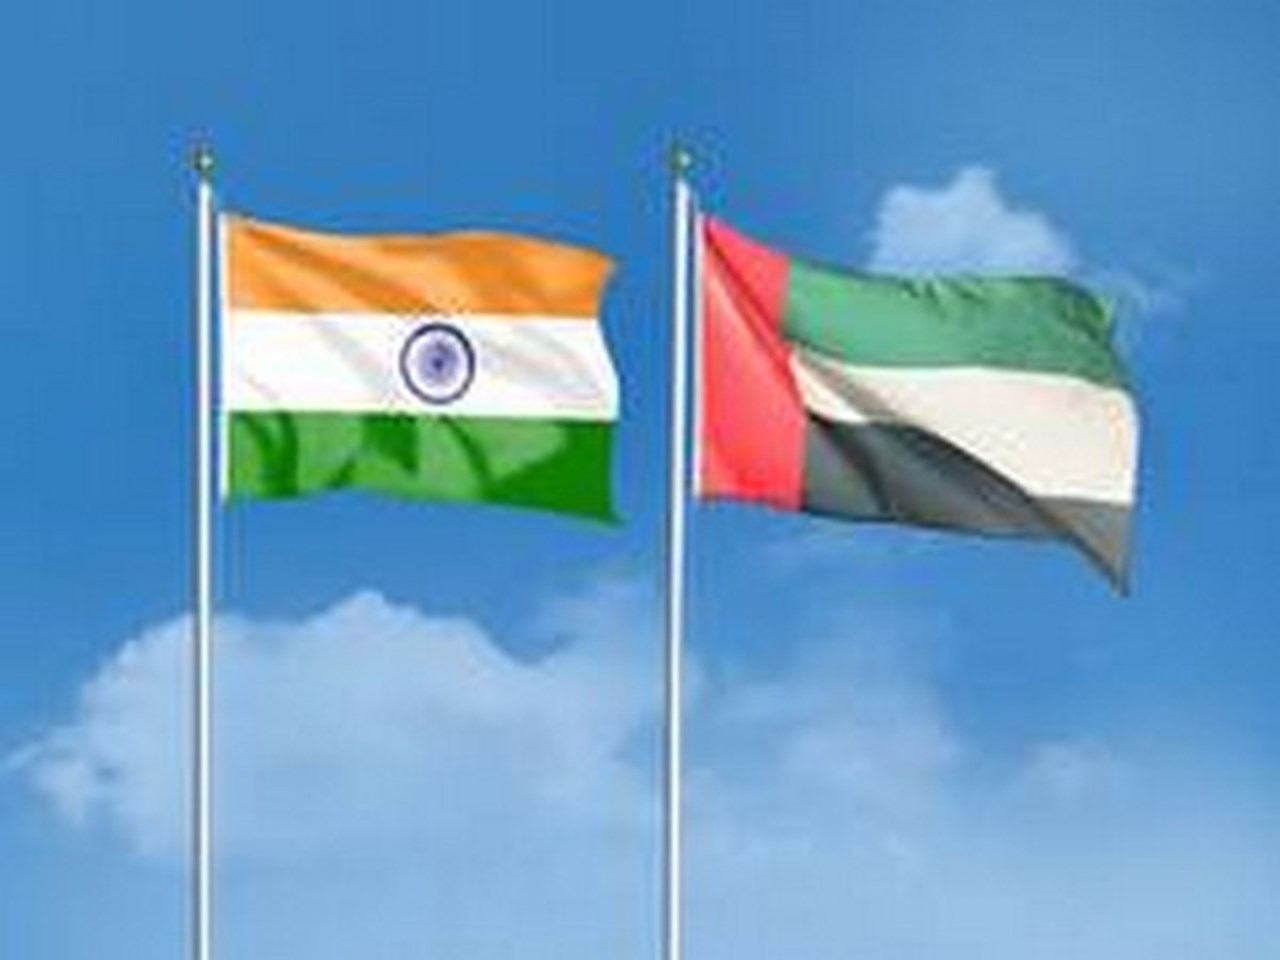 PM મોદી અને UAEના પ્રિન્સ આજે CEPA પર હસ્તાક્ષર કરશે, કરારથી બંને દેશોની આર્થિક ક્ષમતામાં થશે વધારો